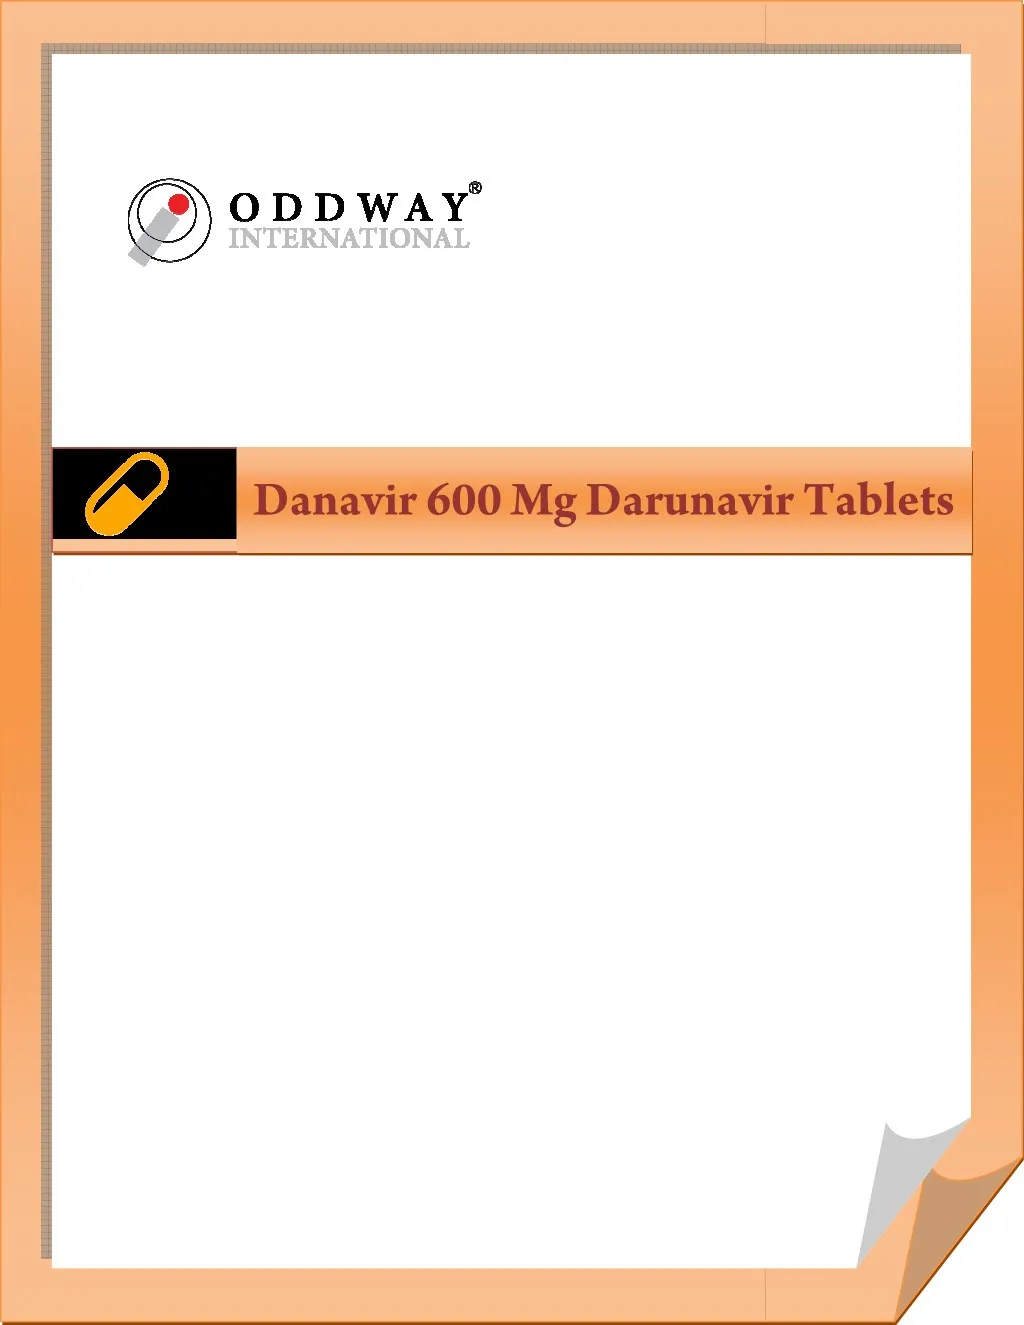 danavir 600 mg darunavir tablets danavir